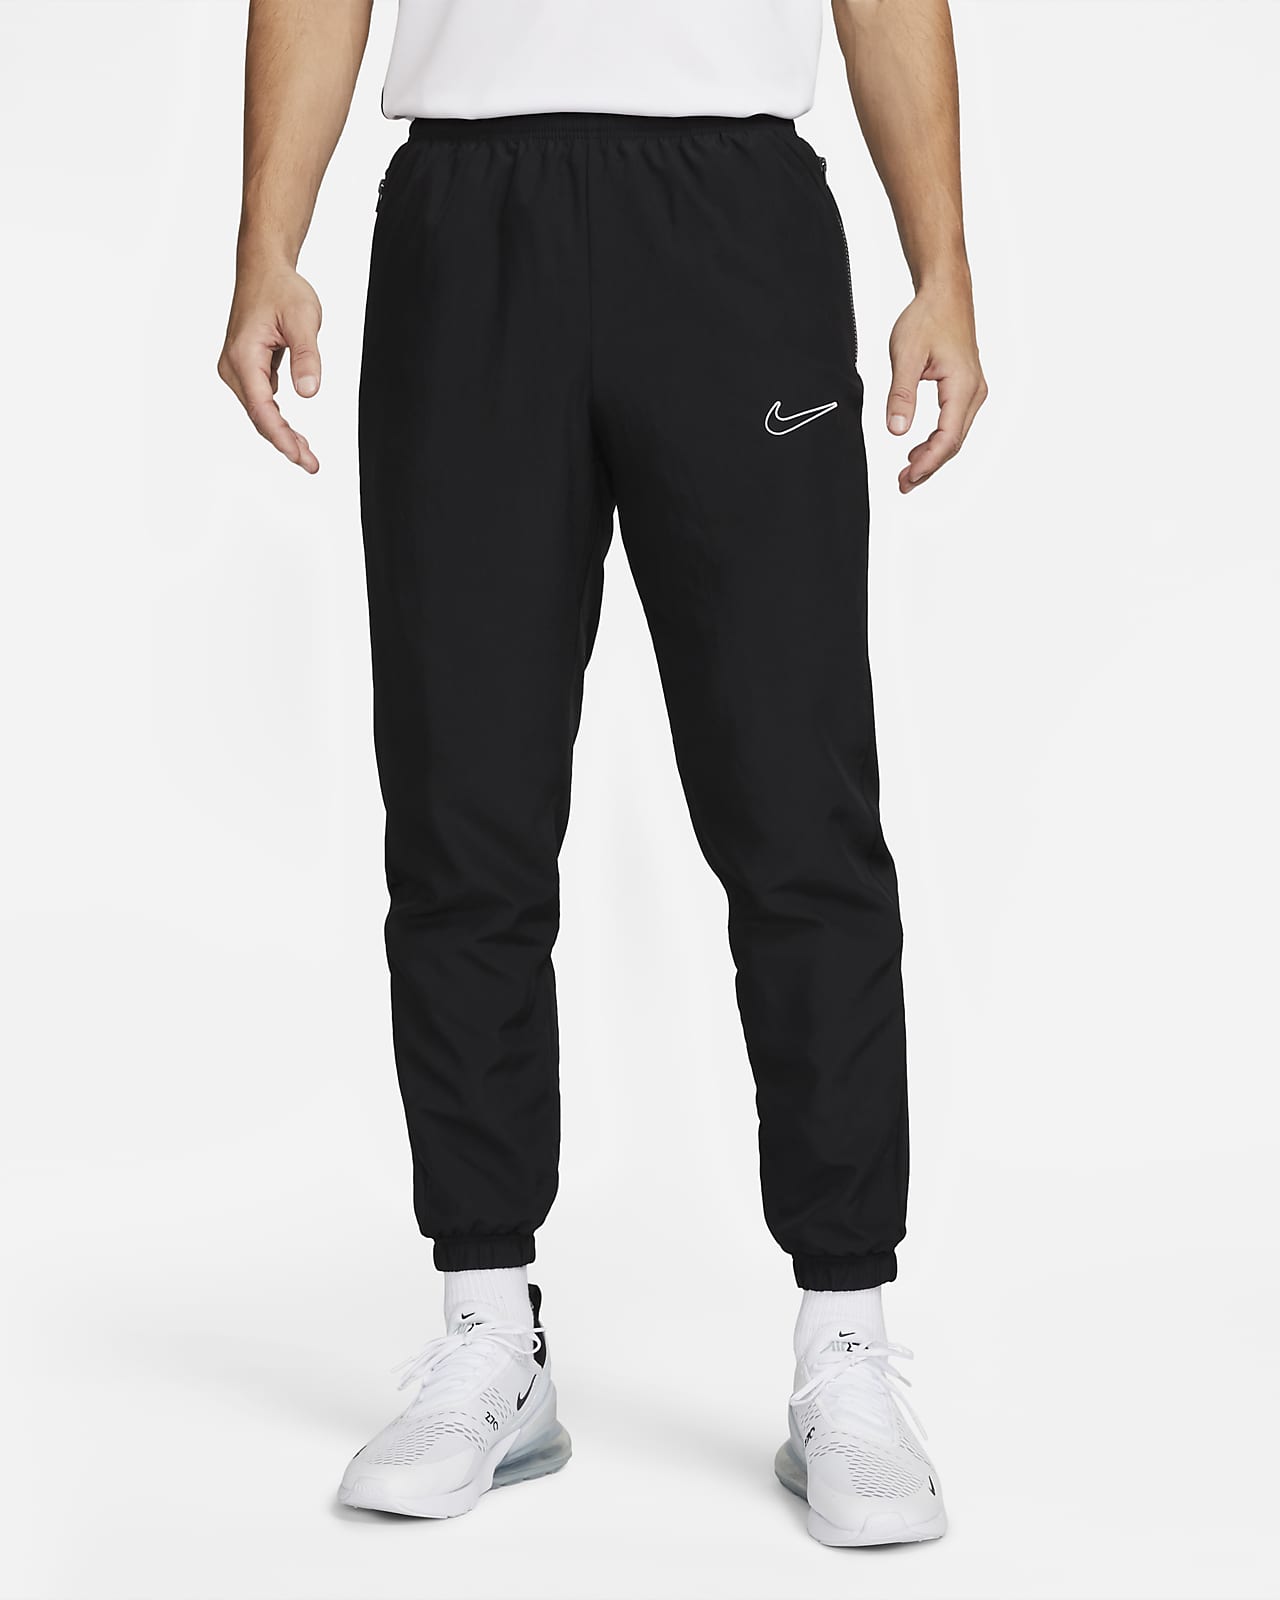 Encogerse de hombros Credo cantidad Pants de fútbol para hombre Dri-FIT Global Nike Academy. Nike MX